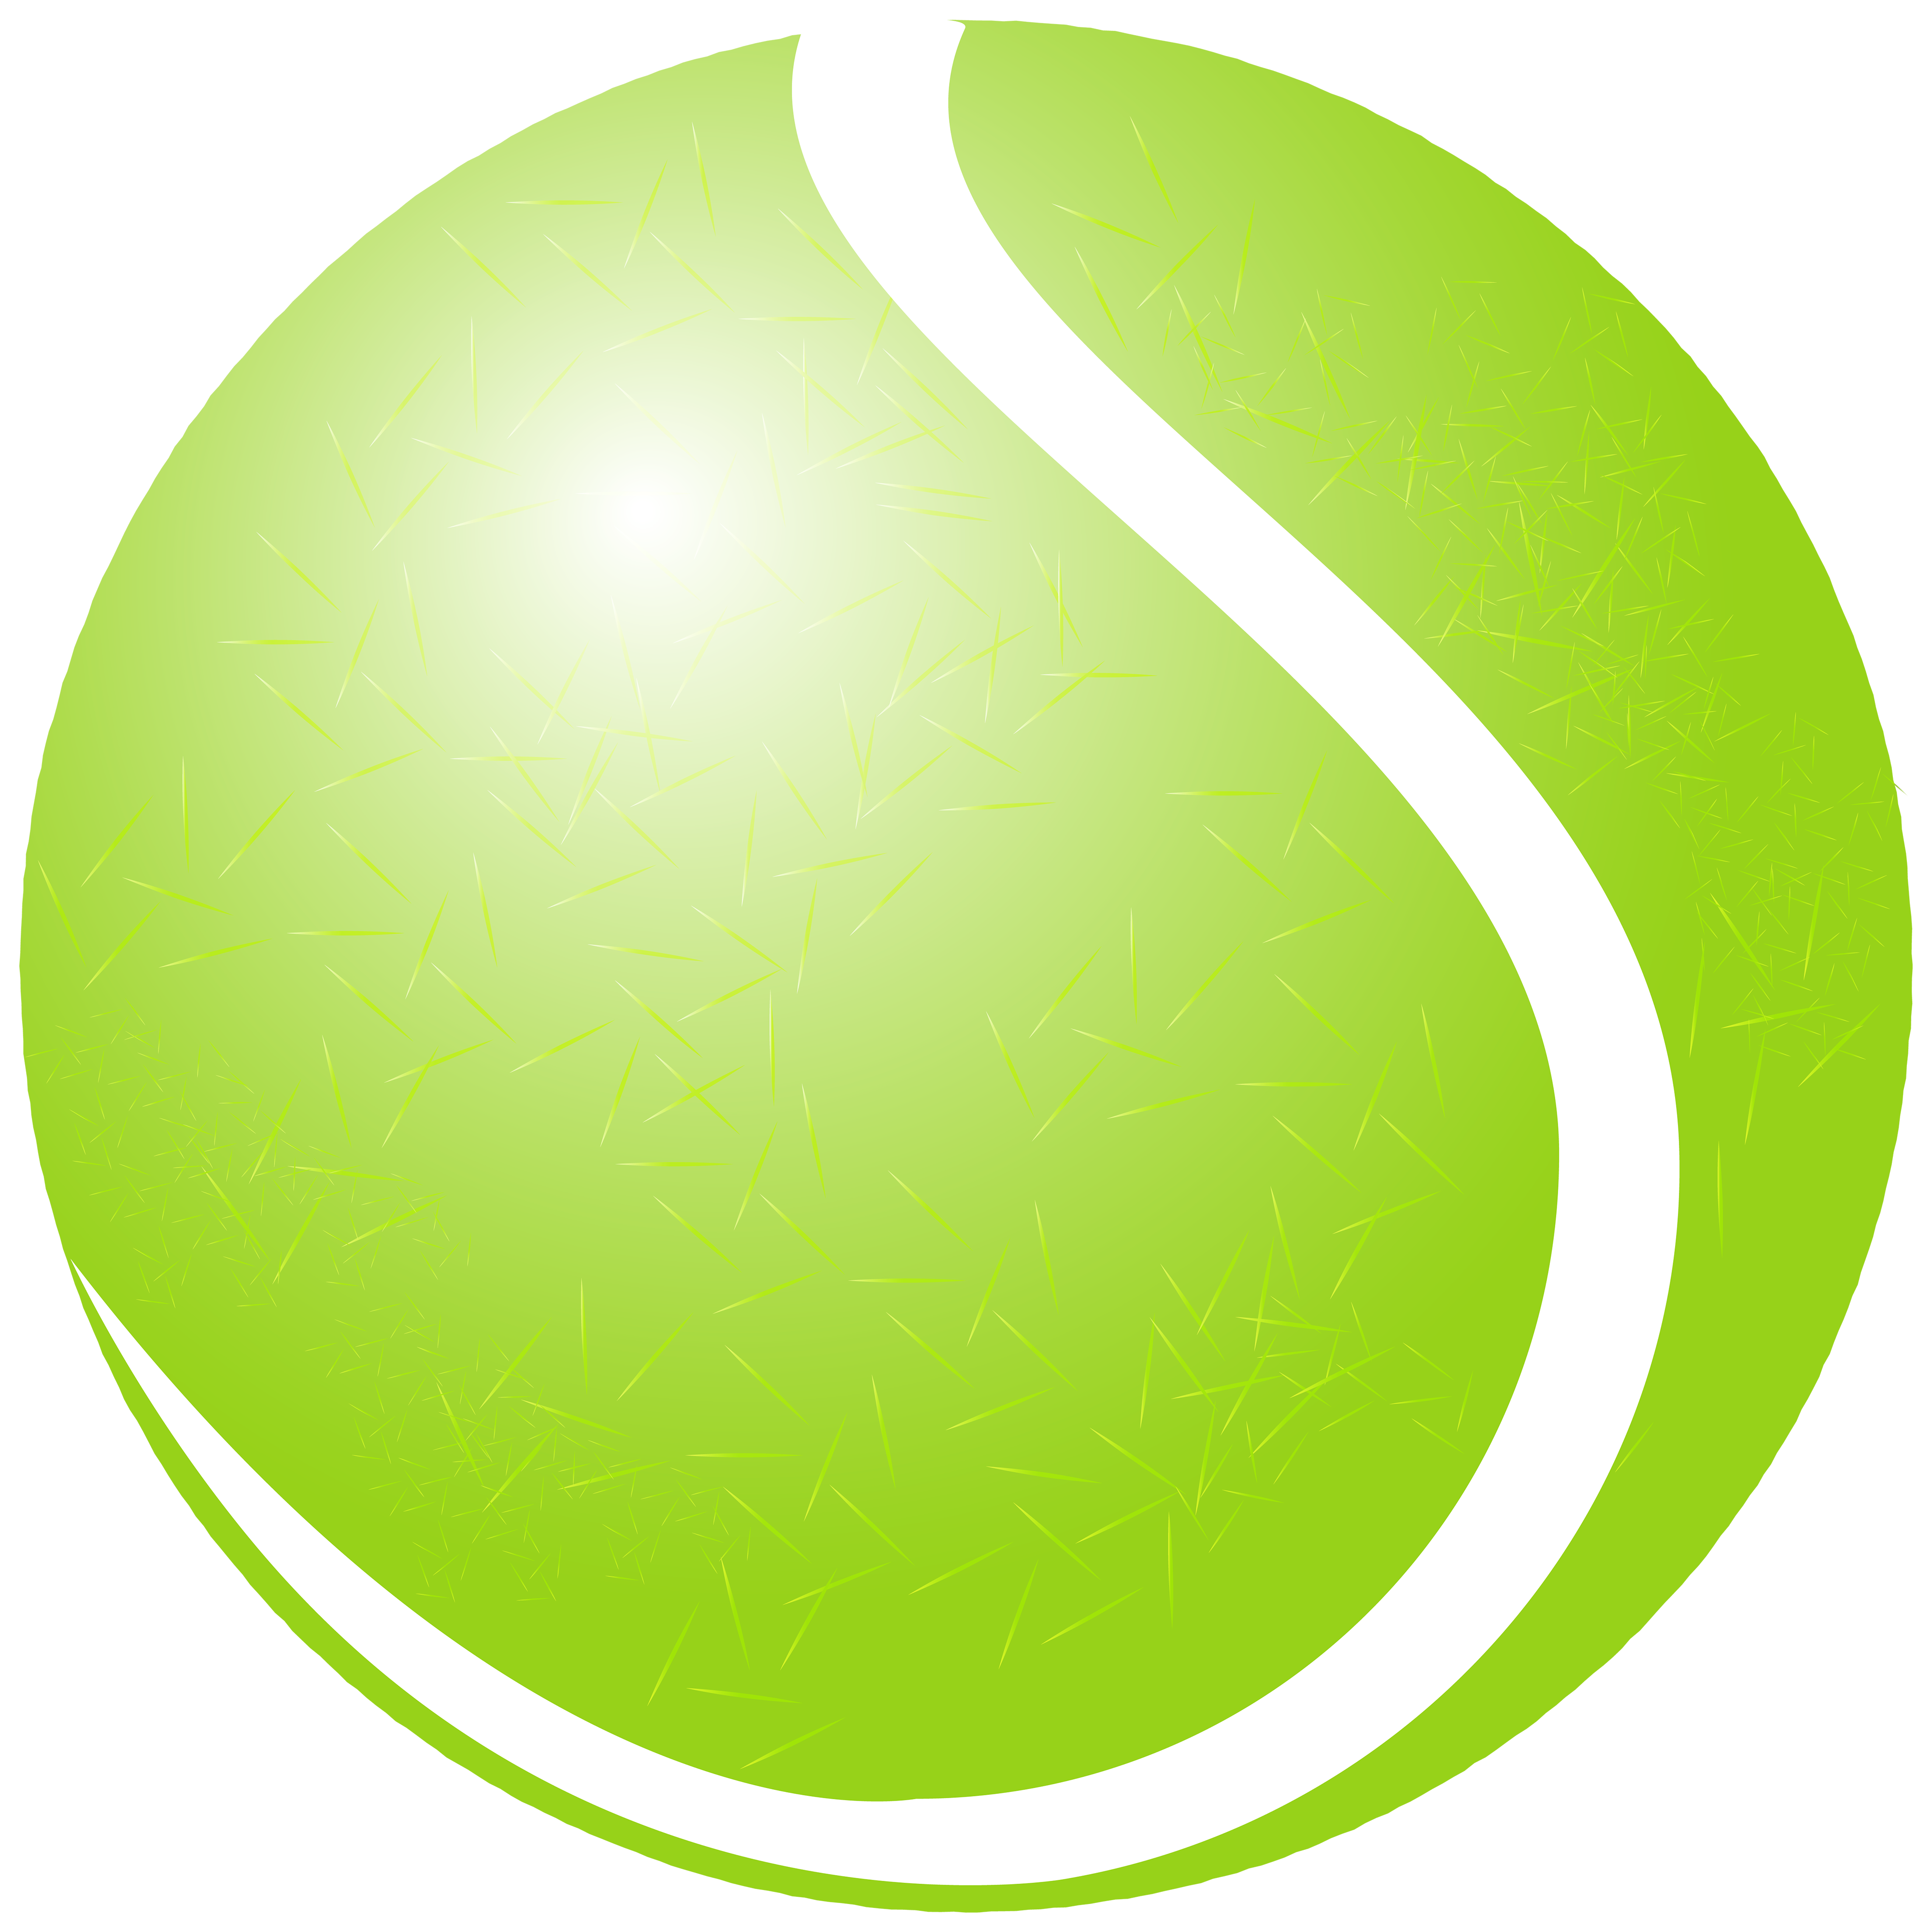 Clipart free tennis. Ball png best web